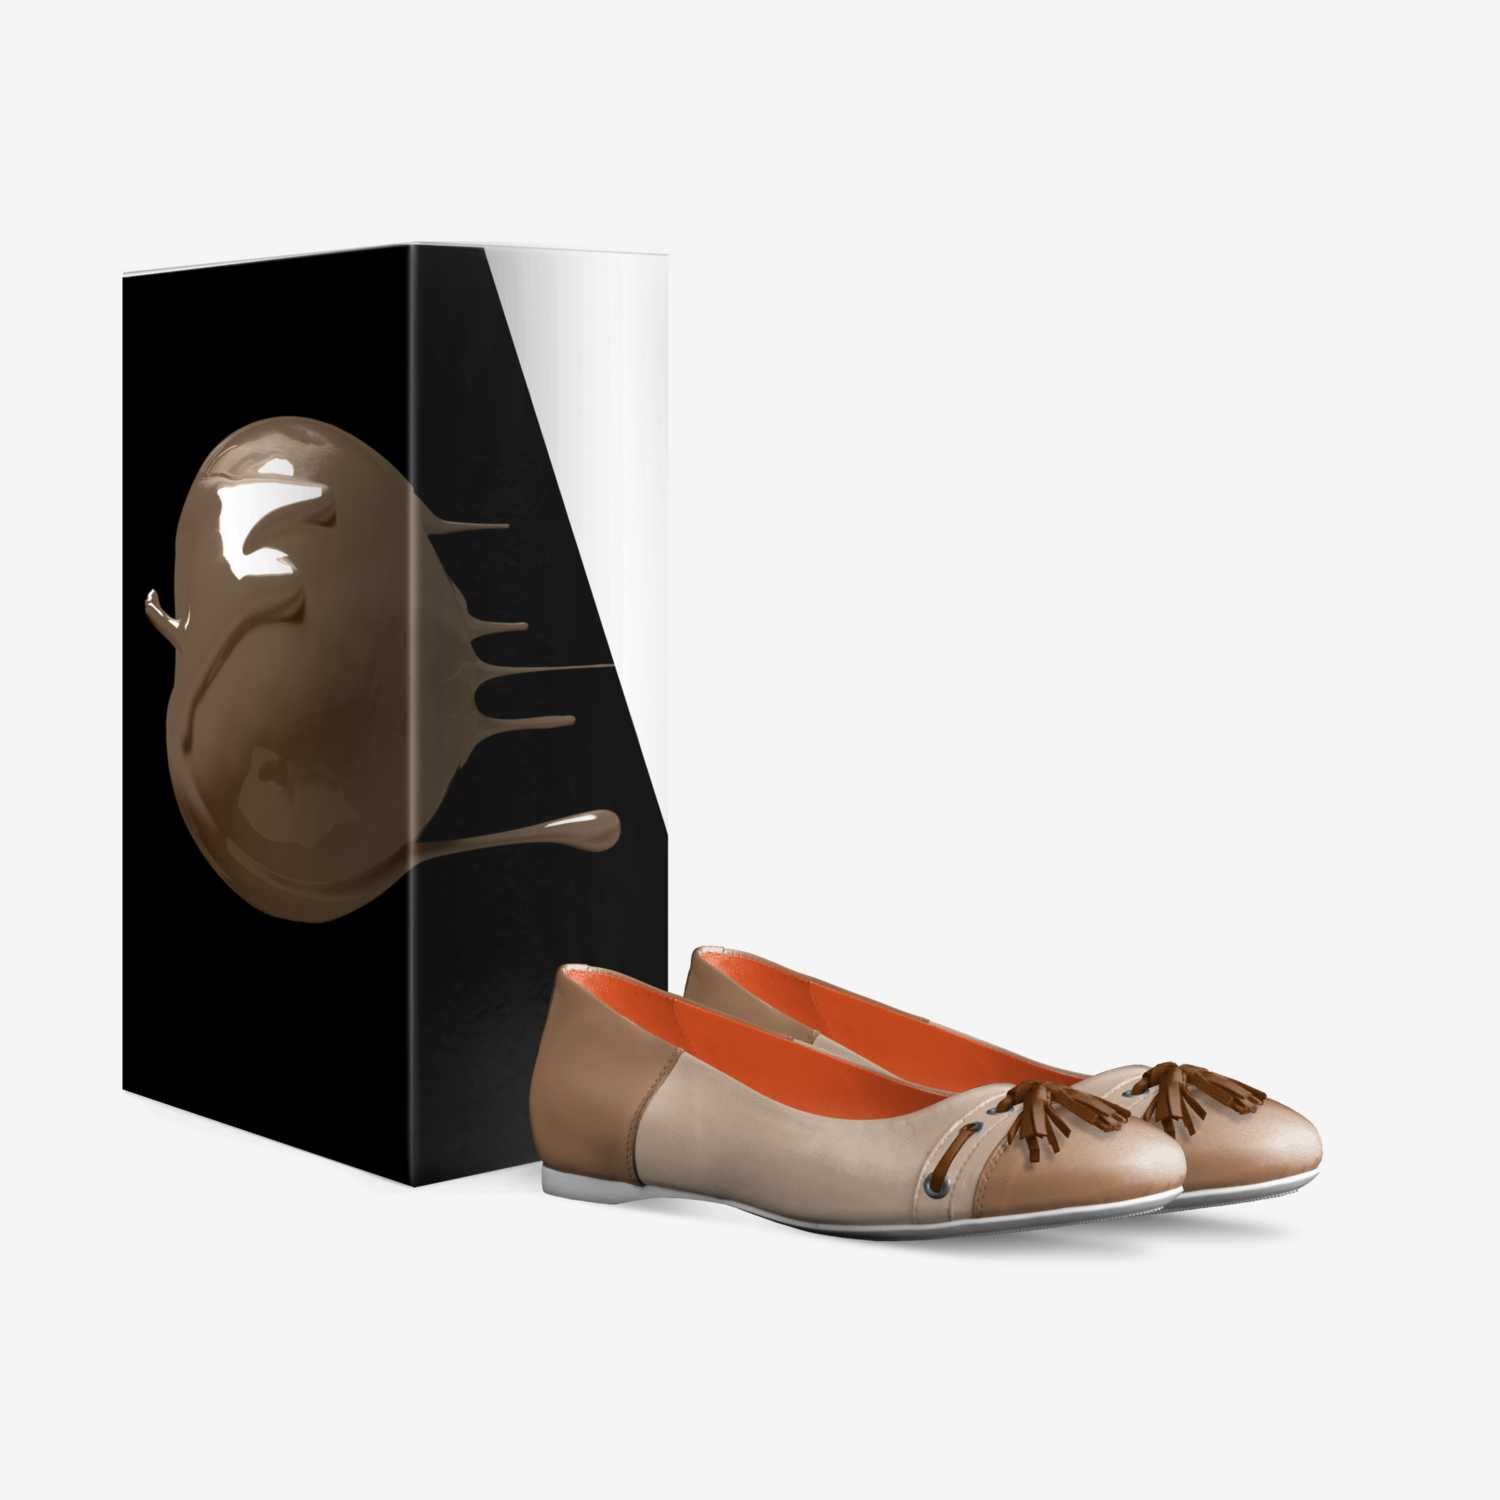 MarMona custom made in Italy shoes by Monique Villanueva | Box view